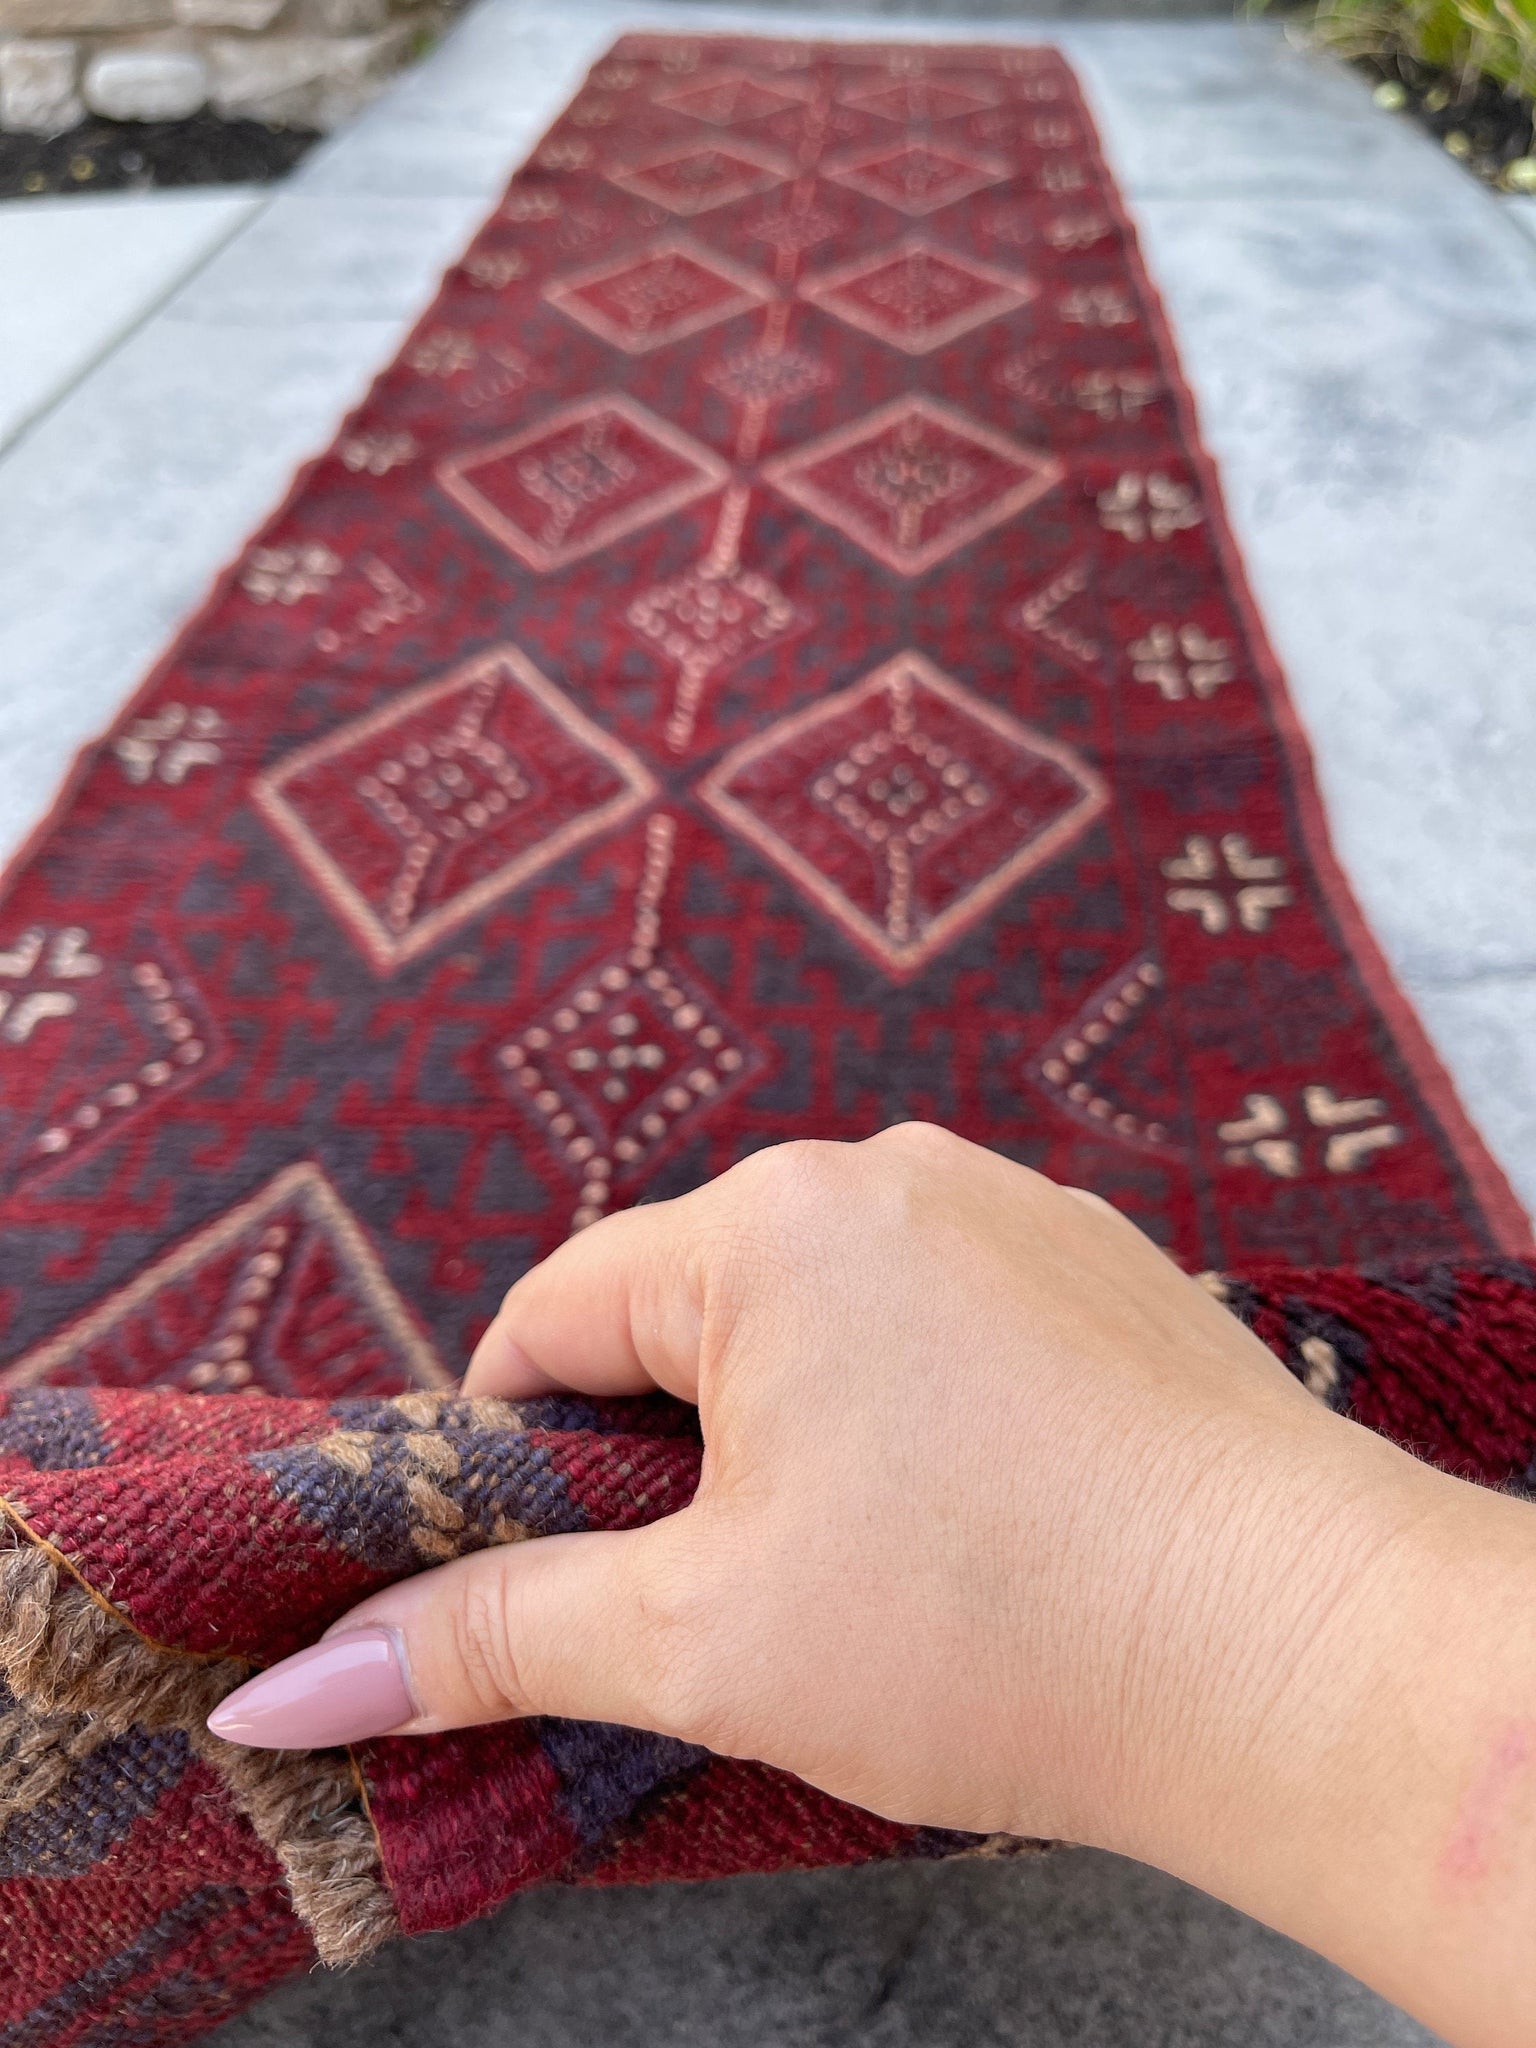 2x9 (60x275) Handmade Afghan Runner Rug | Wine Red Beige Indigo Purple | Flatweave Tribal Turkish Moroccan Oriental Wool Hand Knotted